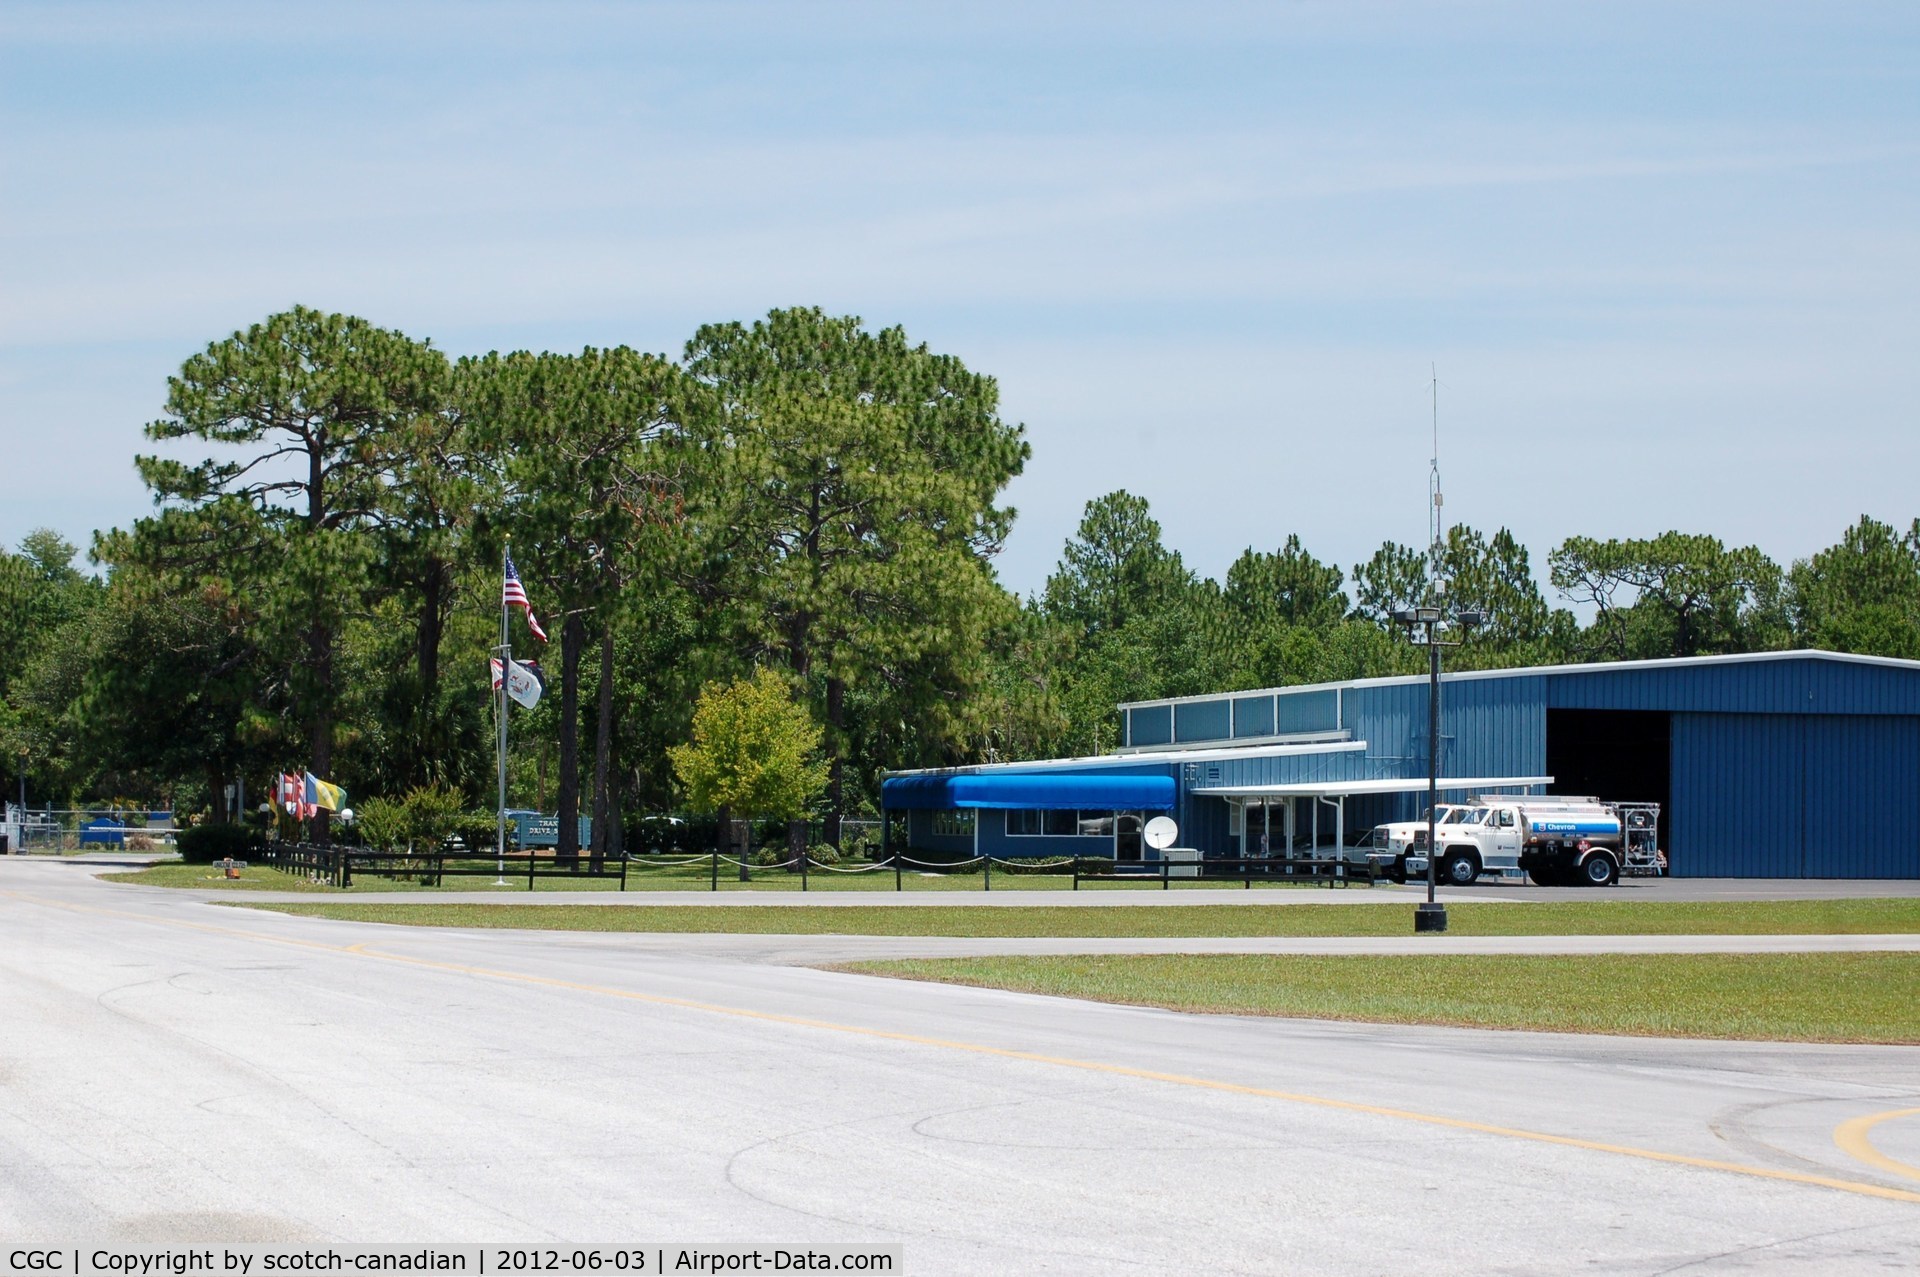 Crystal River Airport (CGC) - Crystal Aero Group FBO at Crystal River Airport, Crystal River, FL 